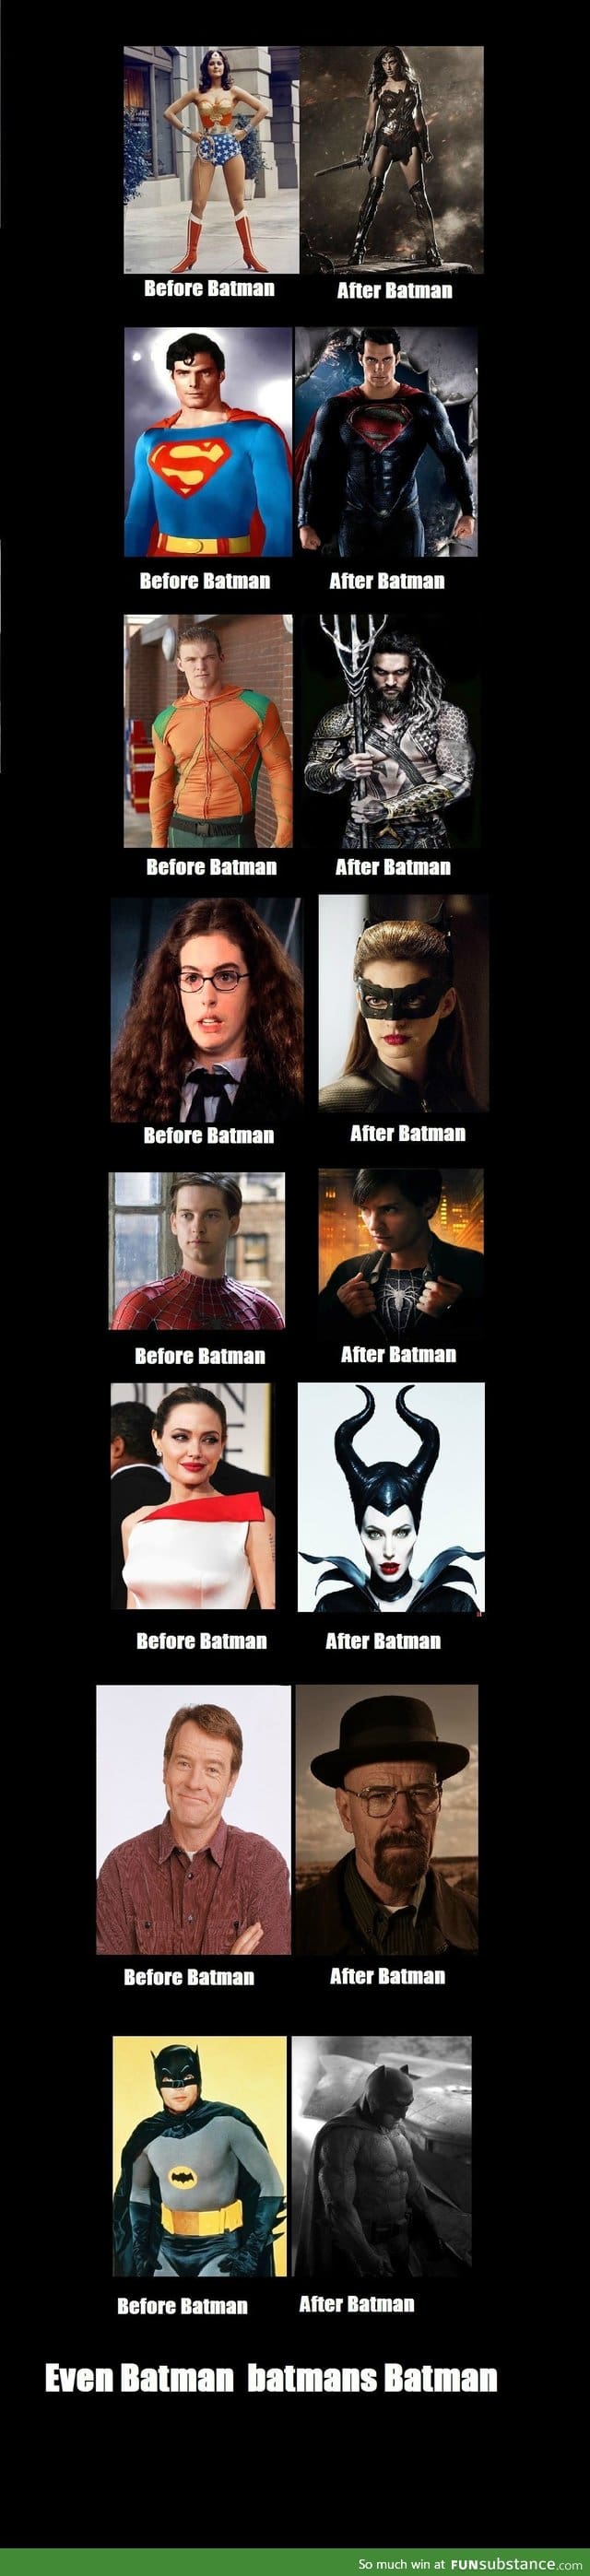 The batman effect